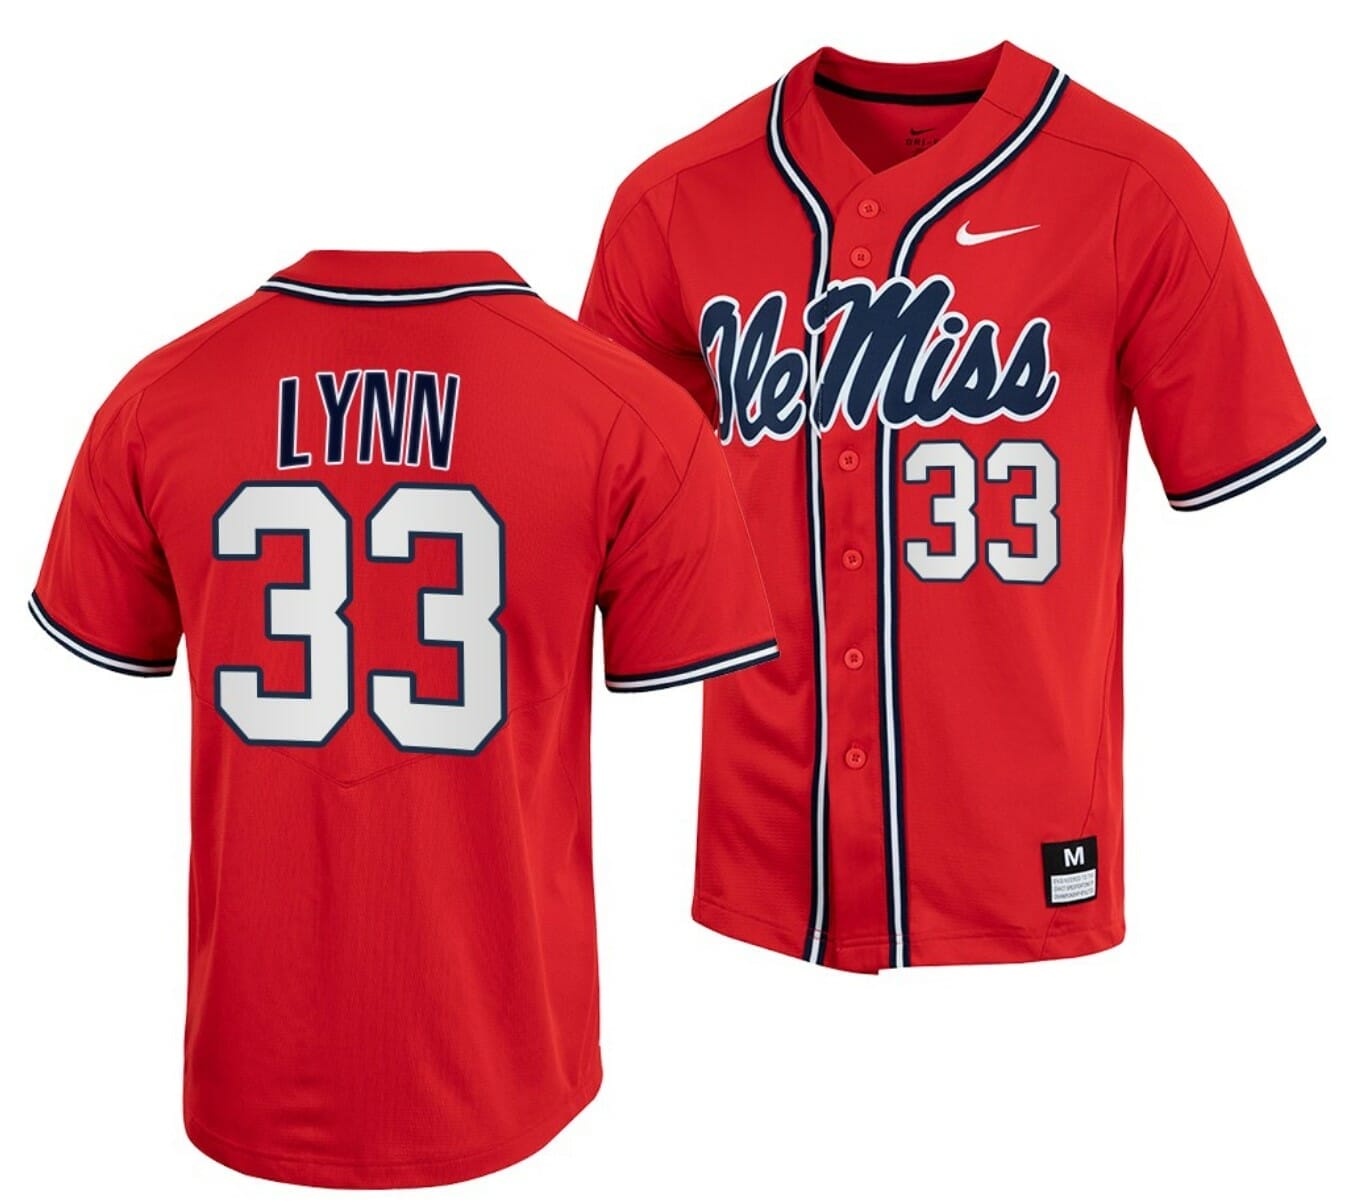 Trending Now] Get New Lance Lynn Jersey Red Baseball #33